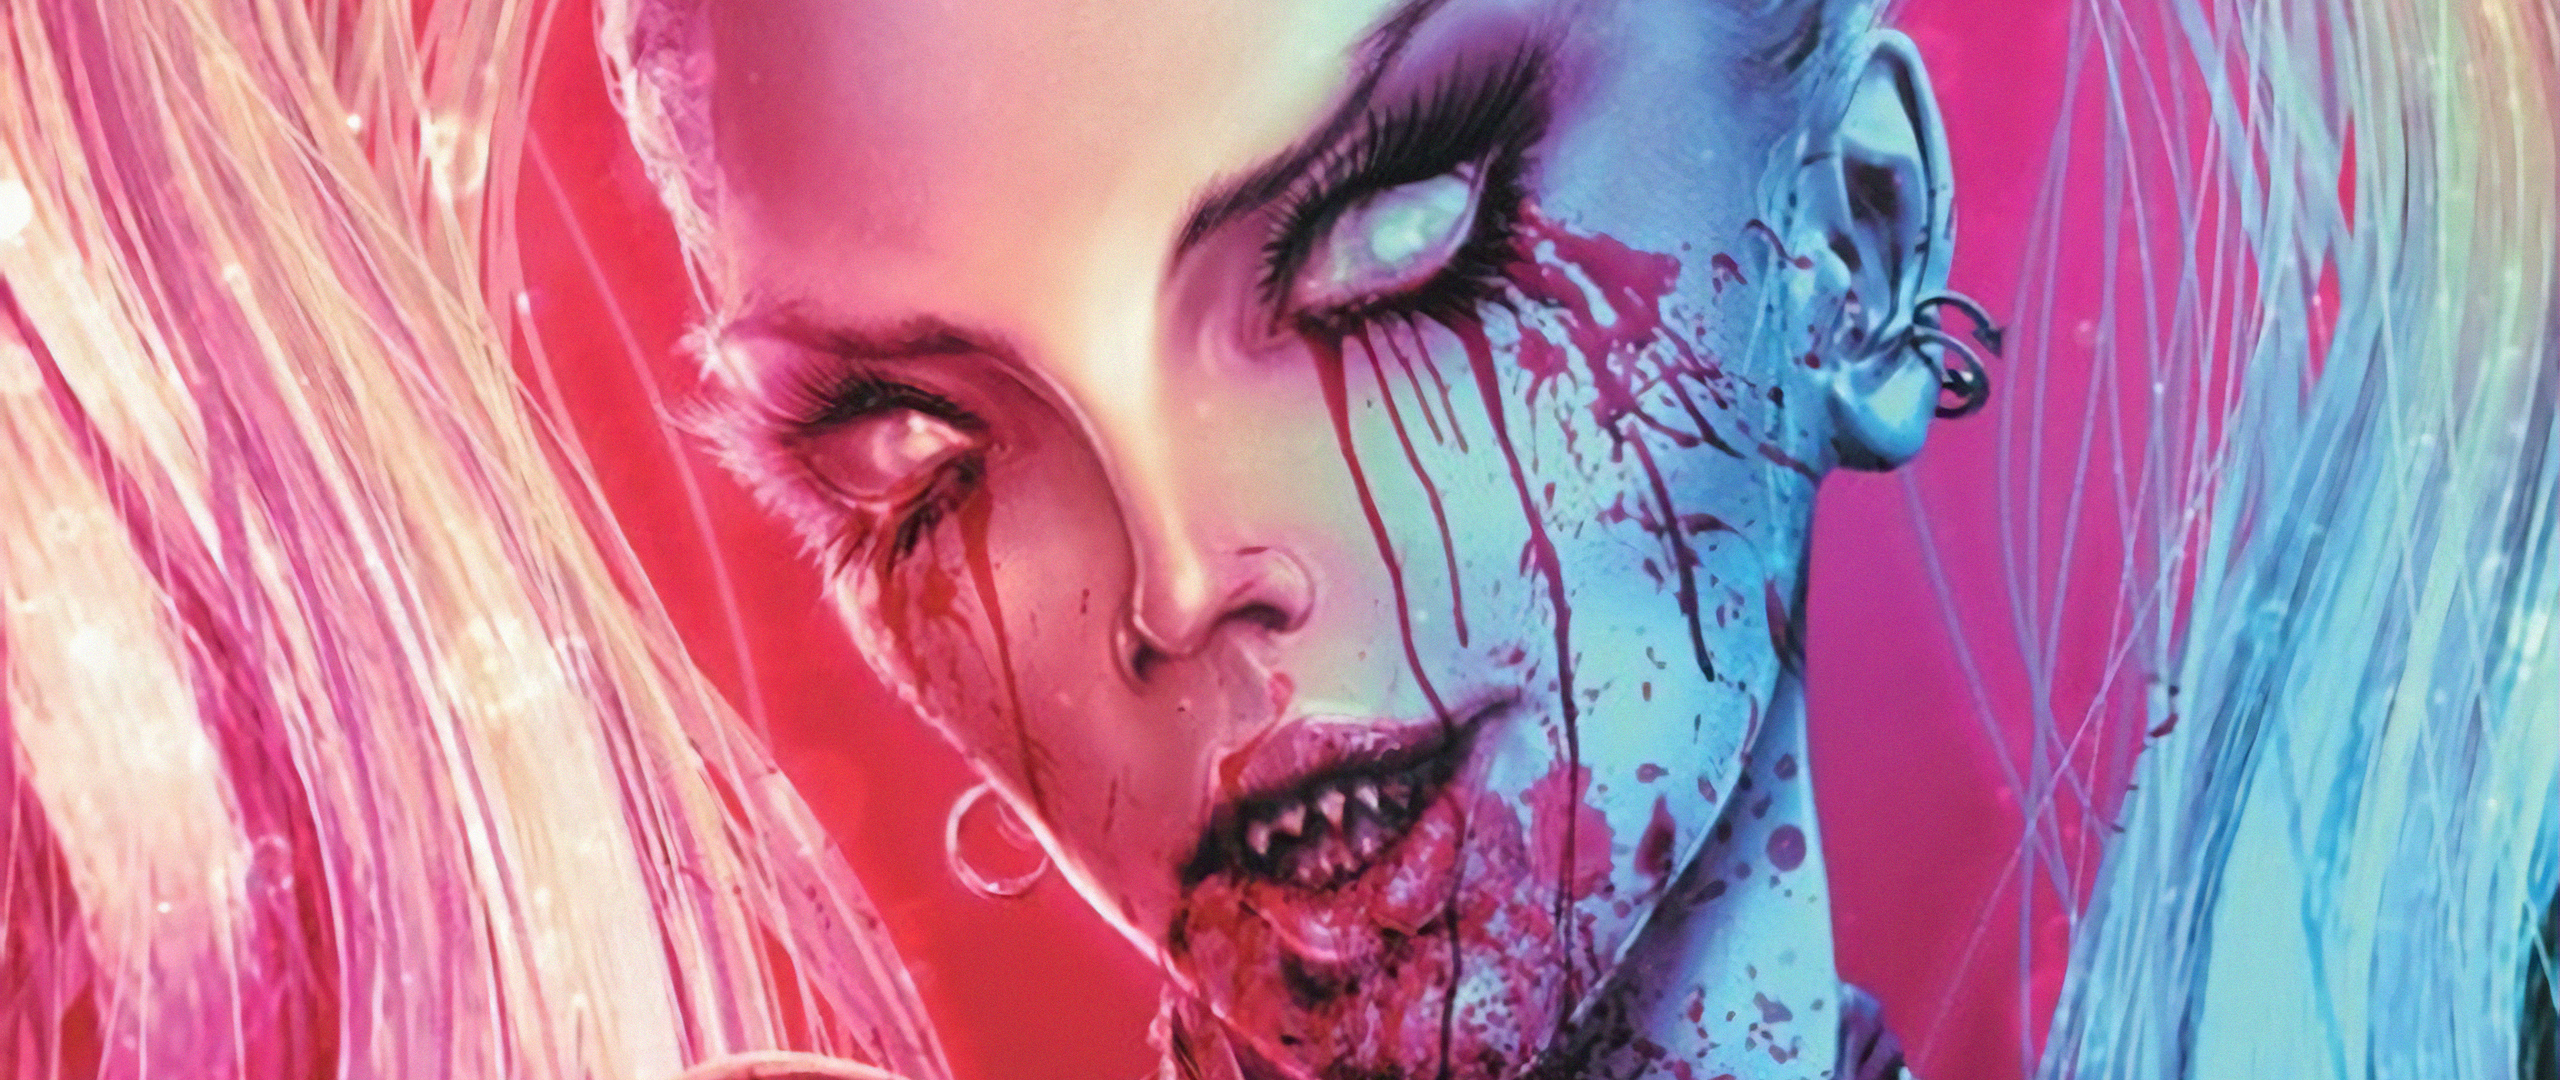 Zombie Harley Quinn In 2560x1080 Resolution. zombie-harley-quinn-52.jpg. 